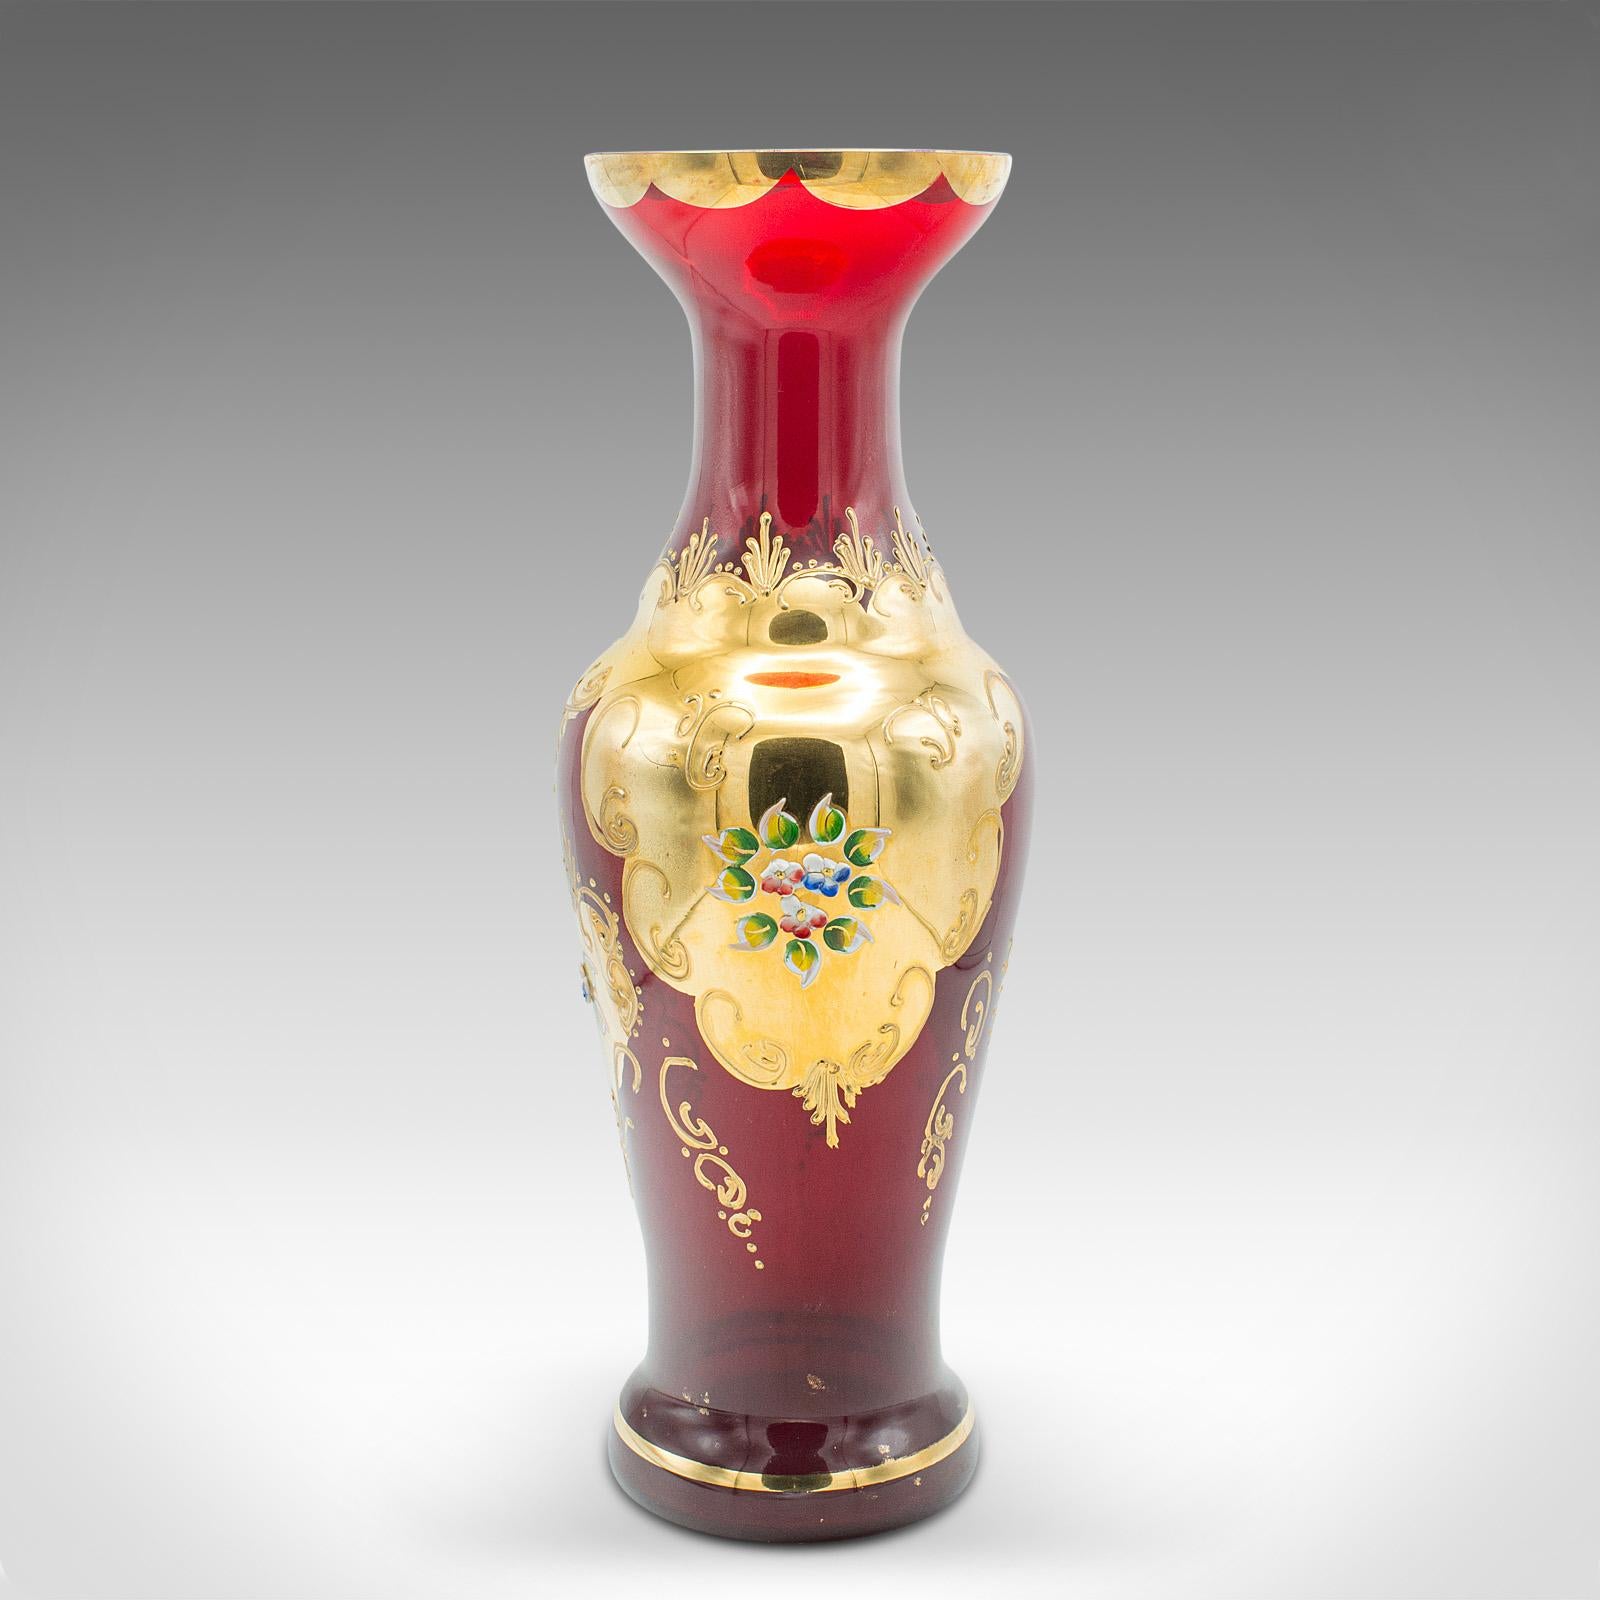 Vintage Venetian Show Vase, Italian Art Glass, Gilt, Decorative Flower Urn, 1970 In Good Condition For Sale In Hele, Devon, GB